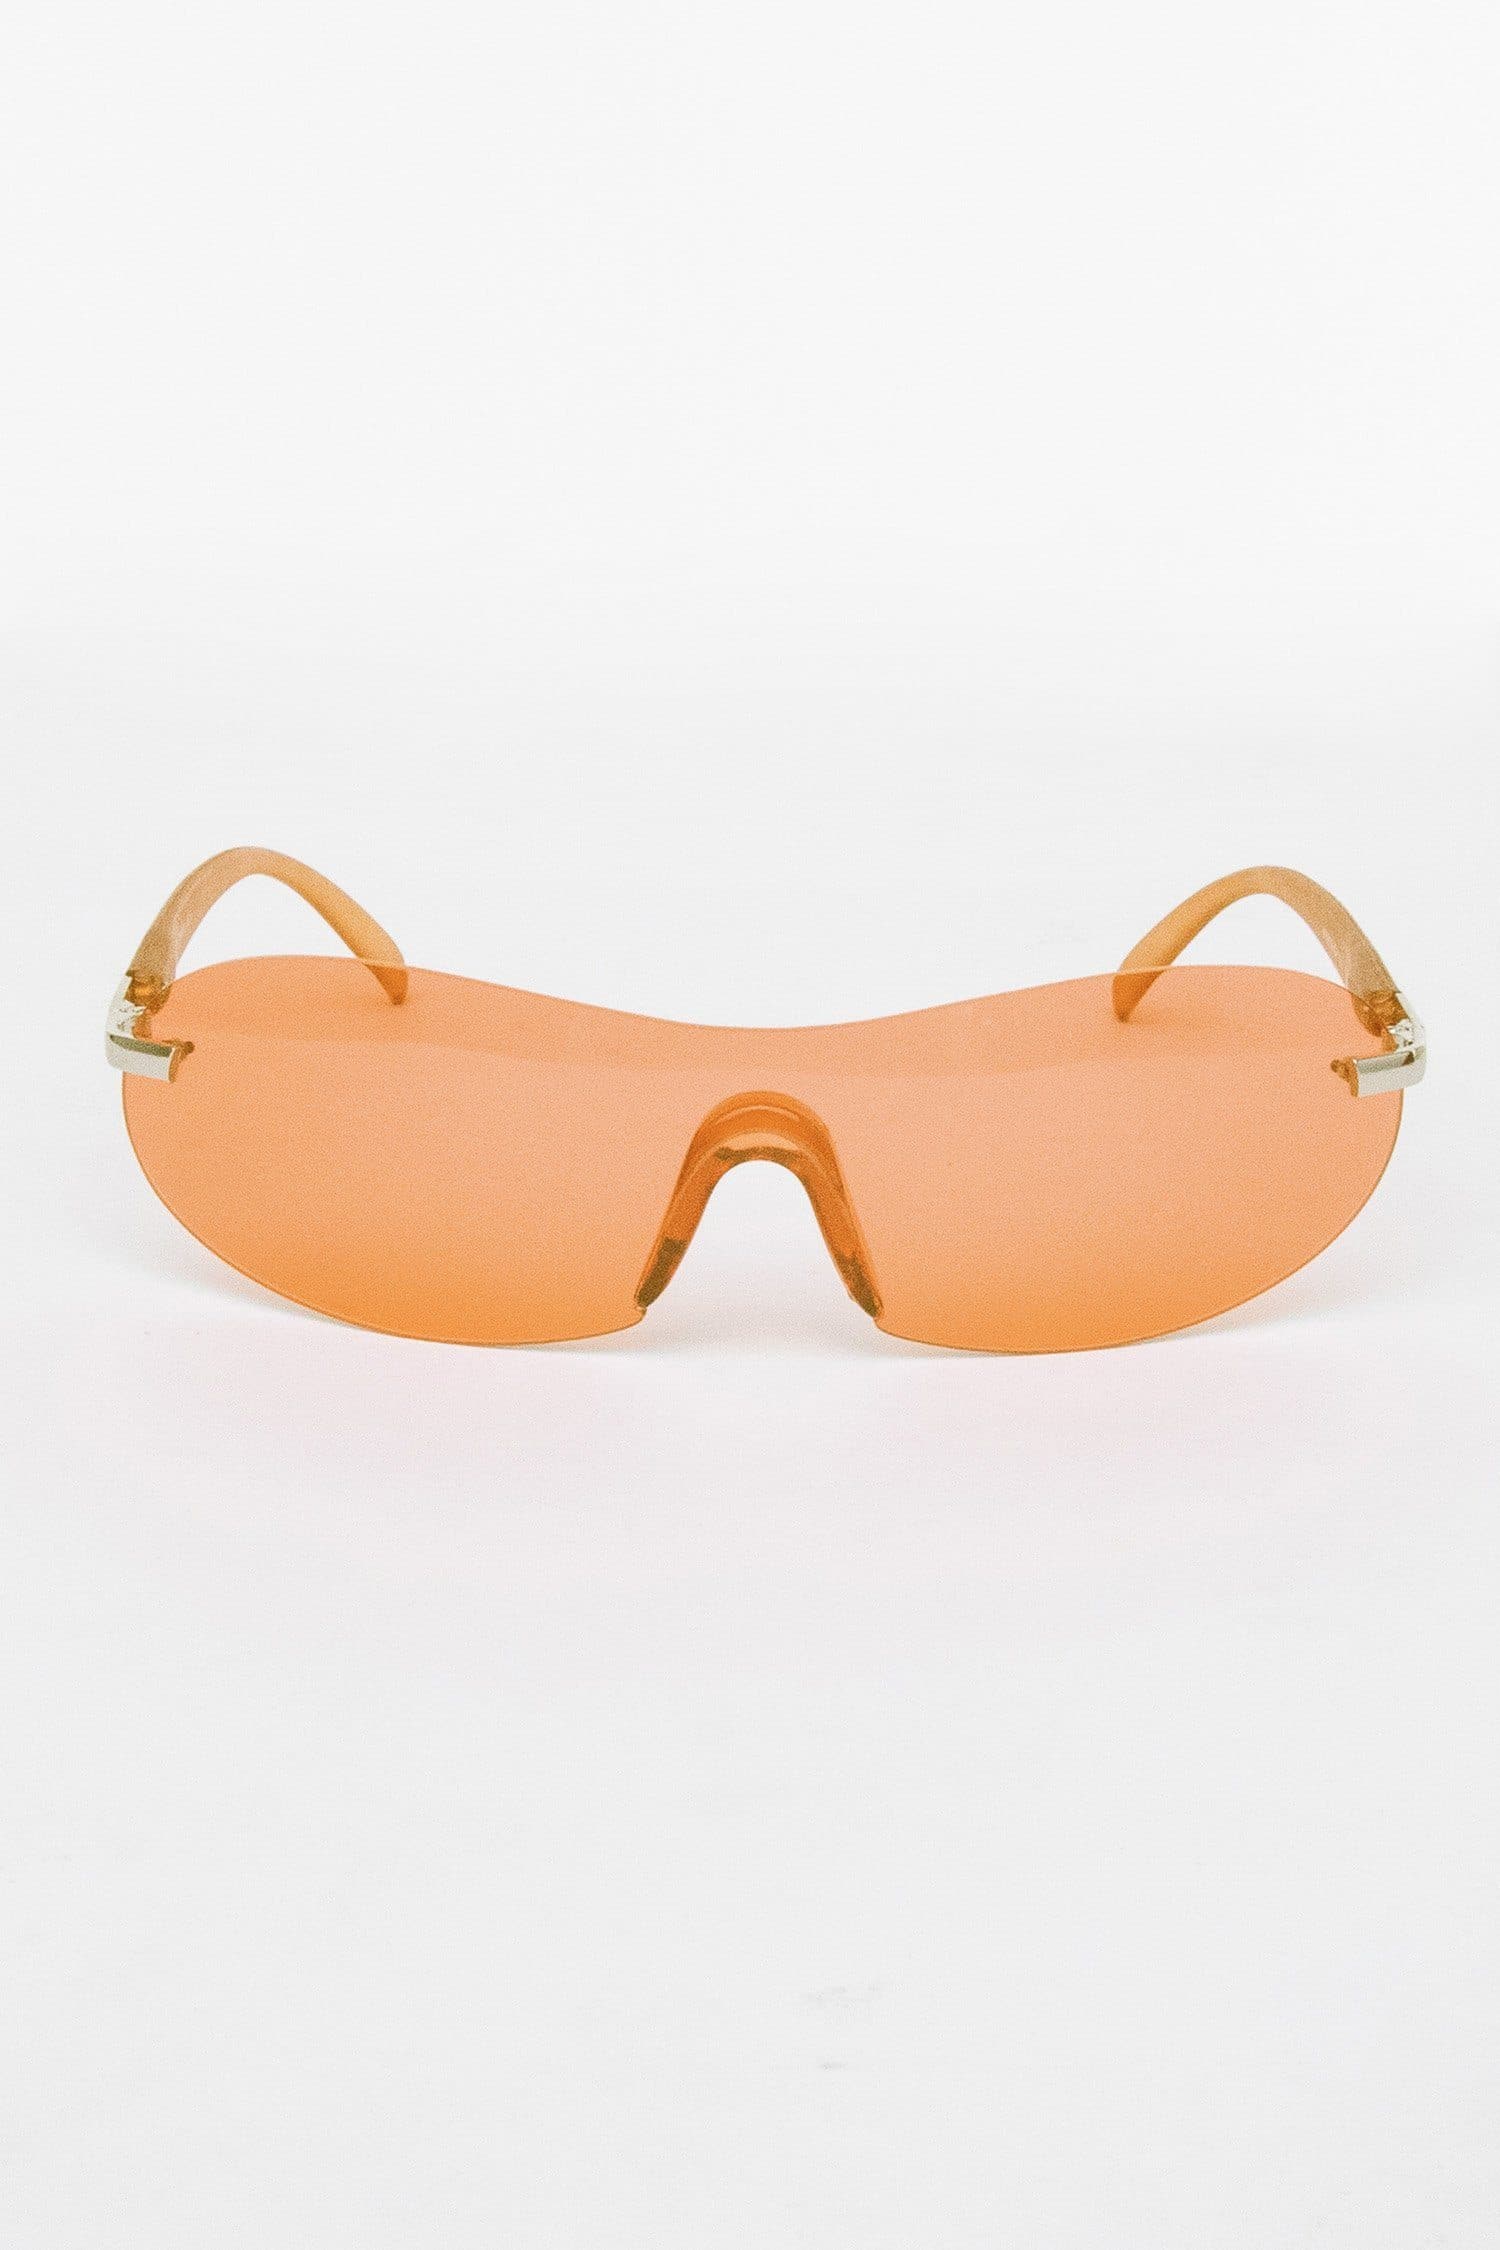 Graffiti Shield Sports Sunglasses